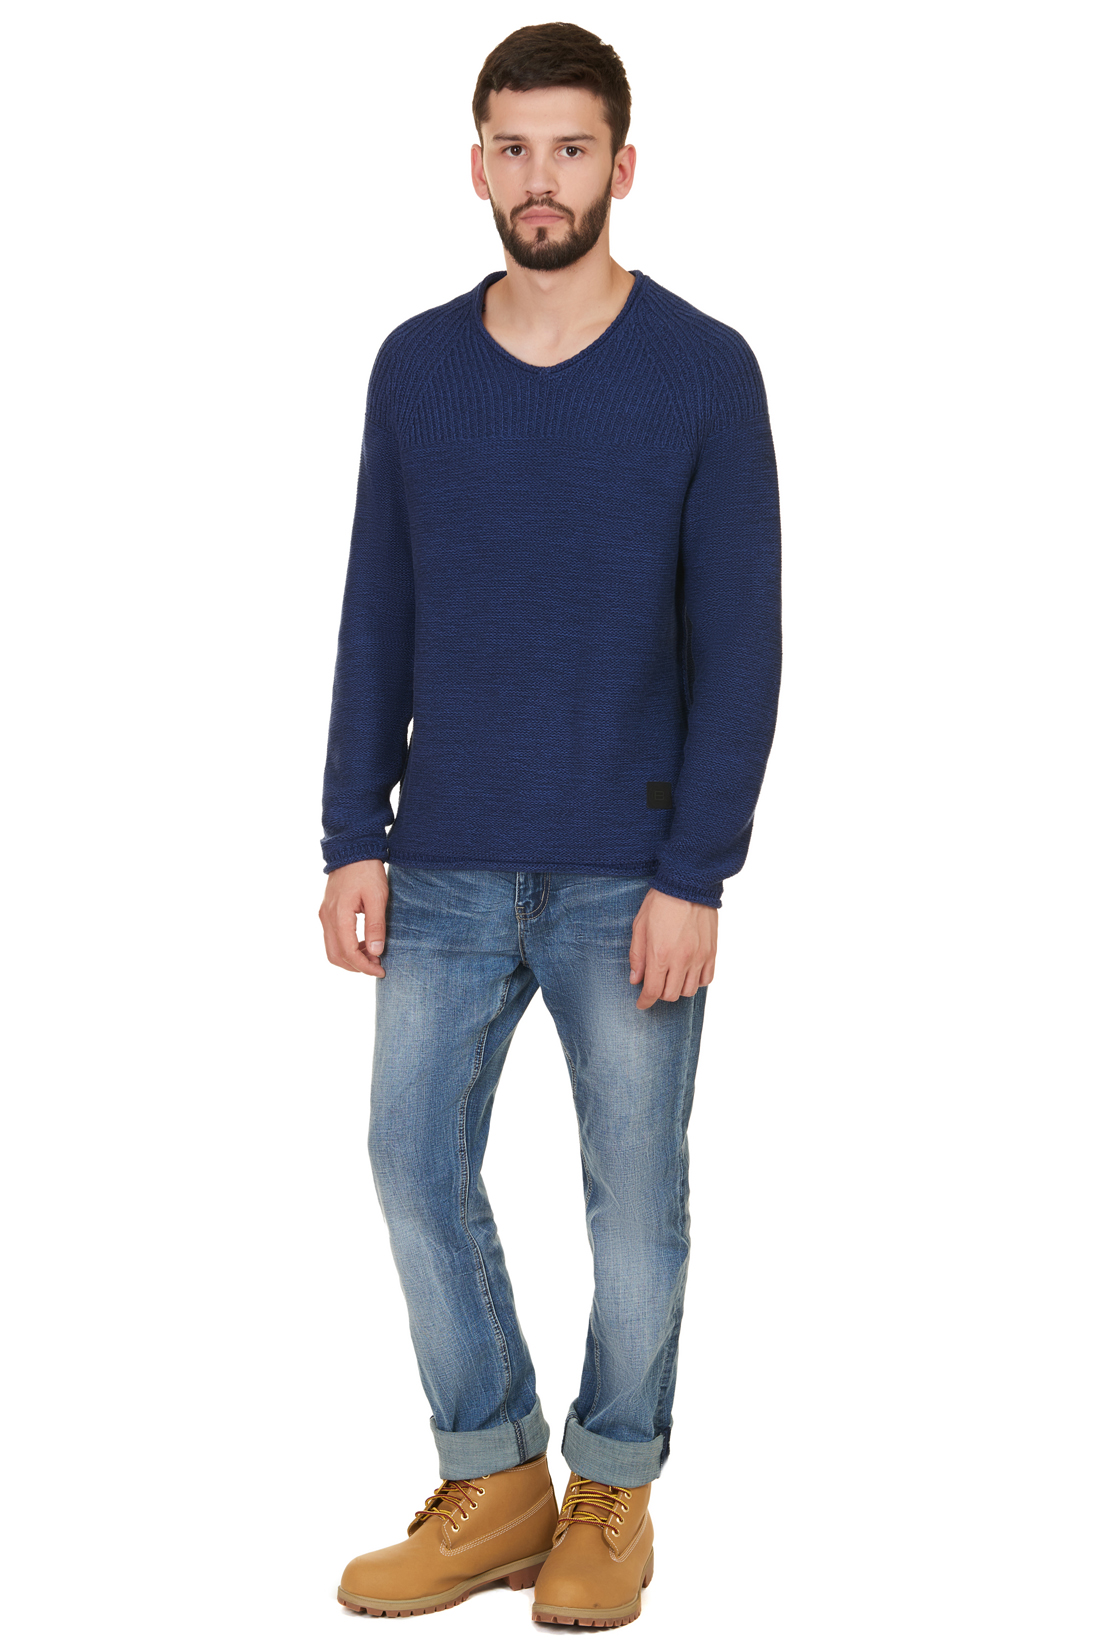 Пуловер из хлопка (арт. baon B637520), размер XXL, цвет deep navy melange#синий Пуловер из хлопка (арт. baon B637520) - фото 5